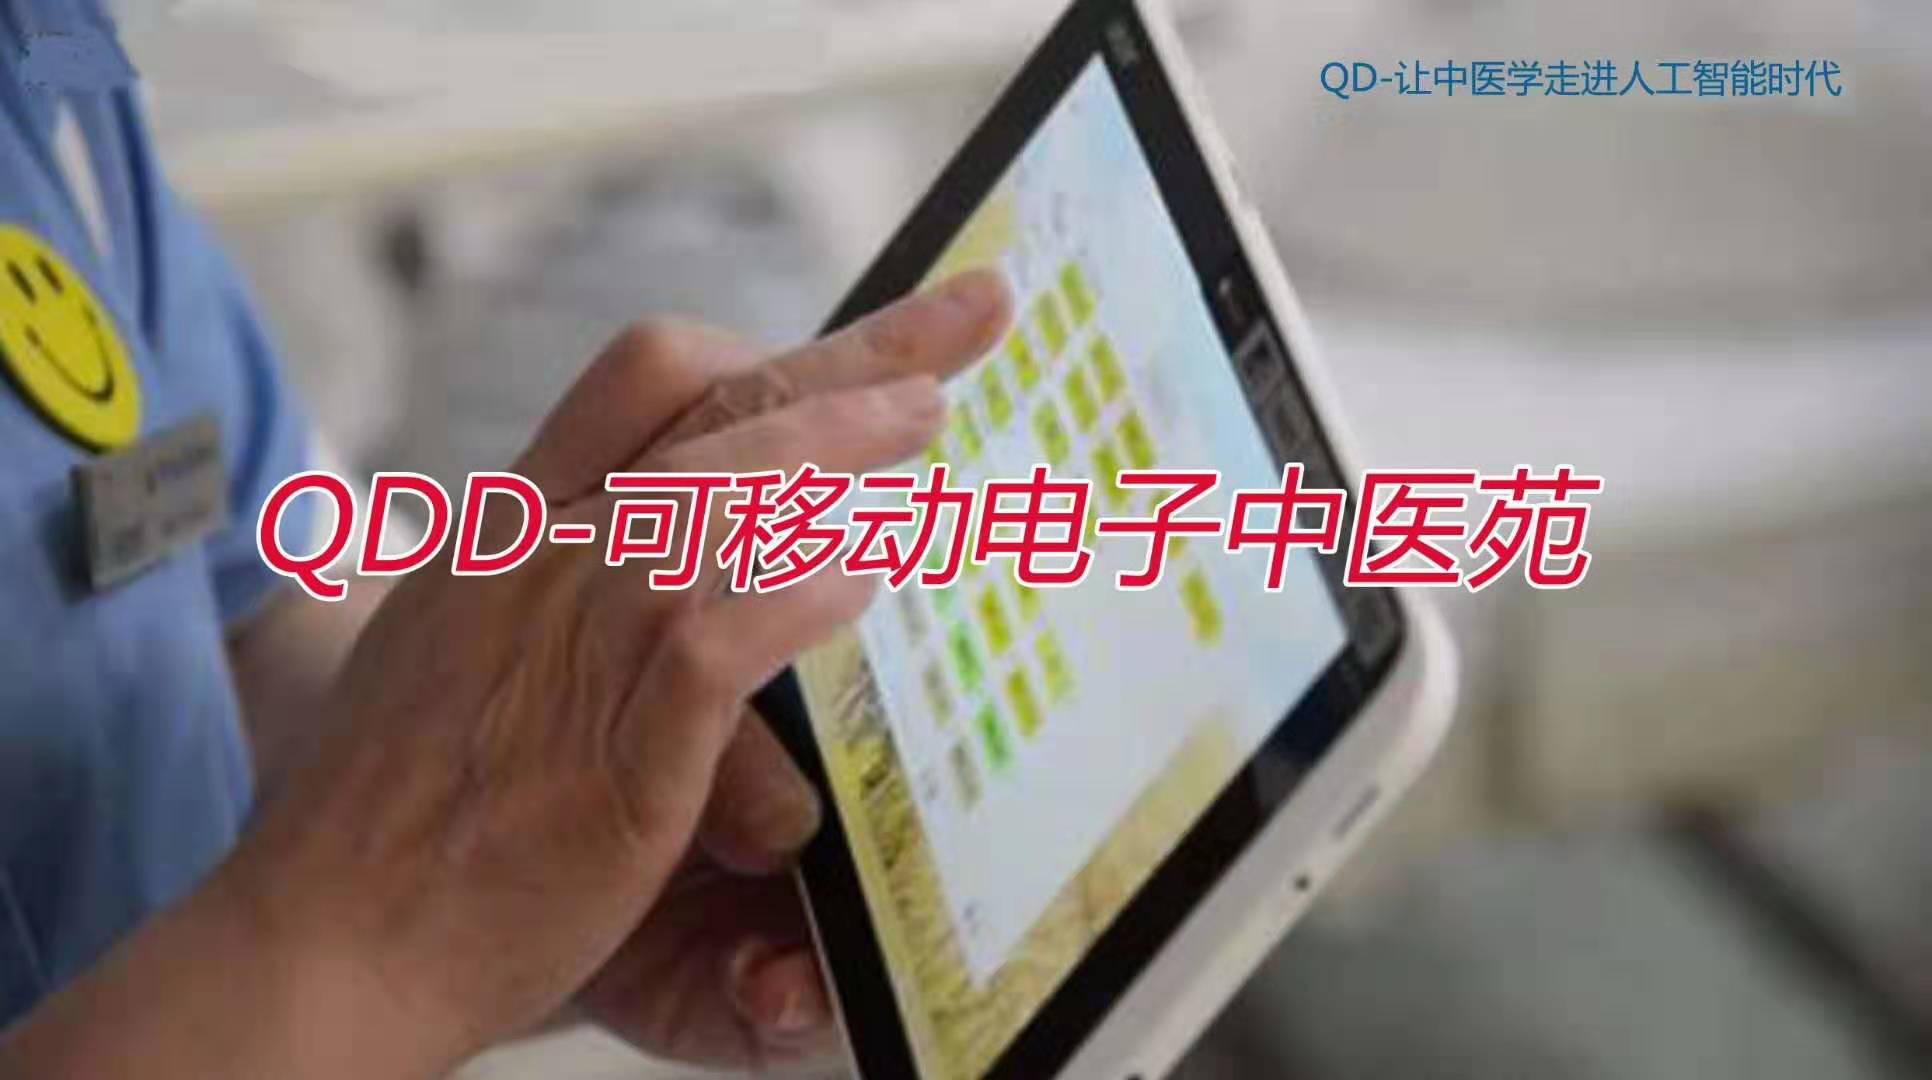 QDD平板、手机——可移动电子中医苑